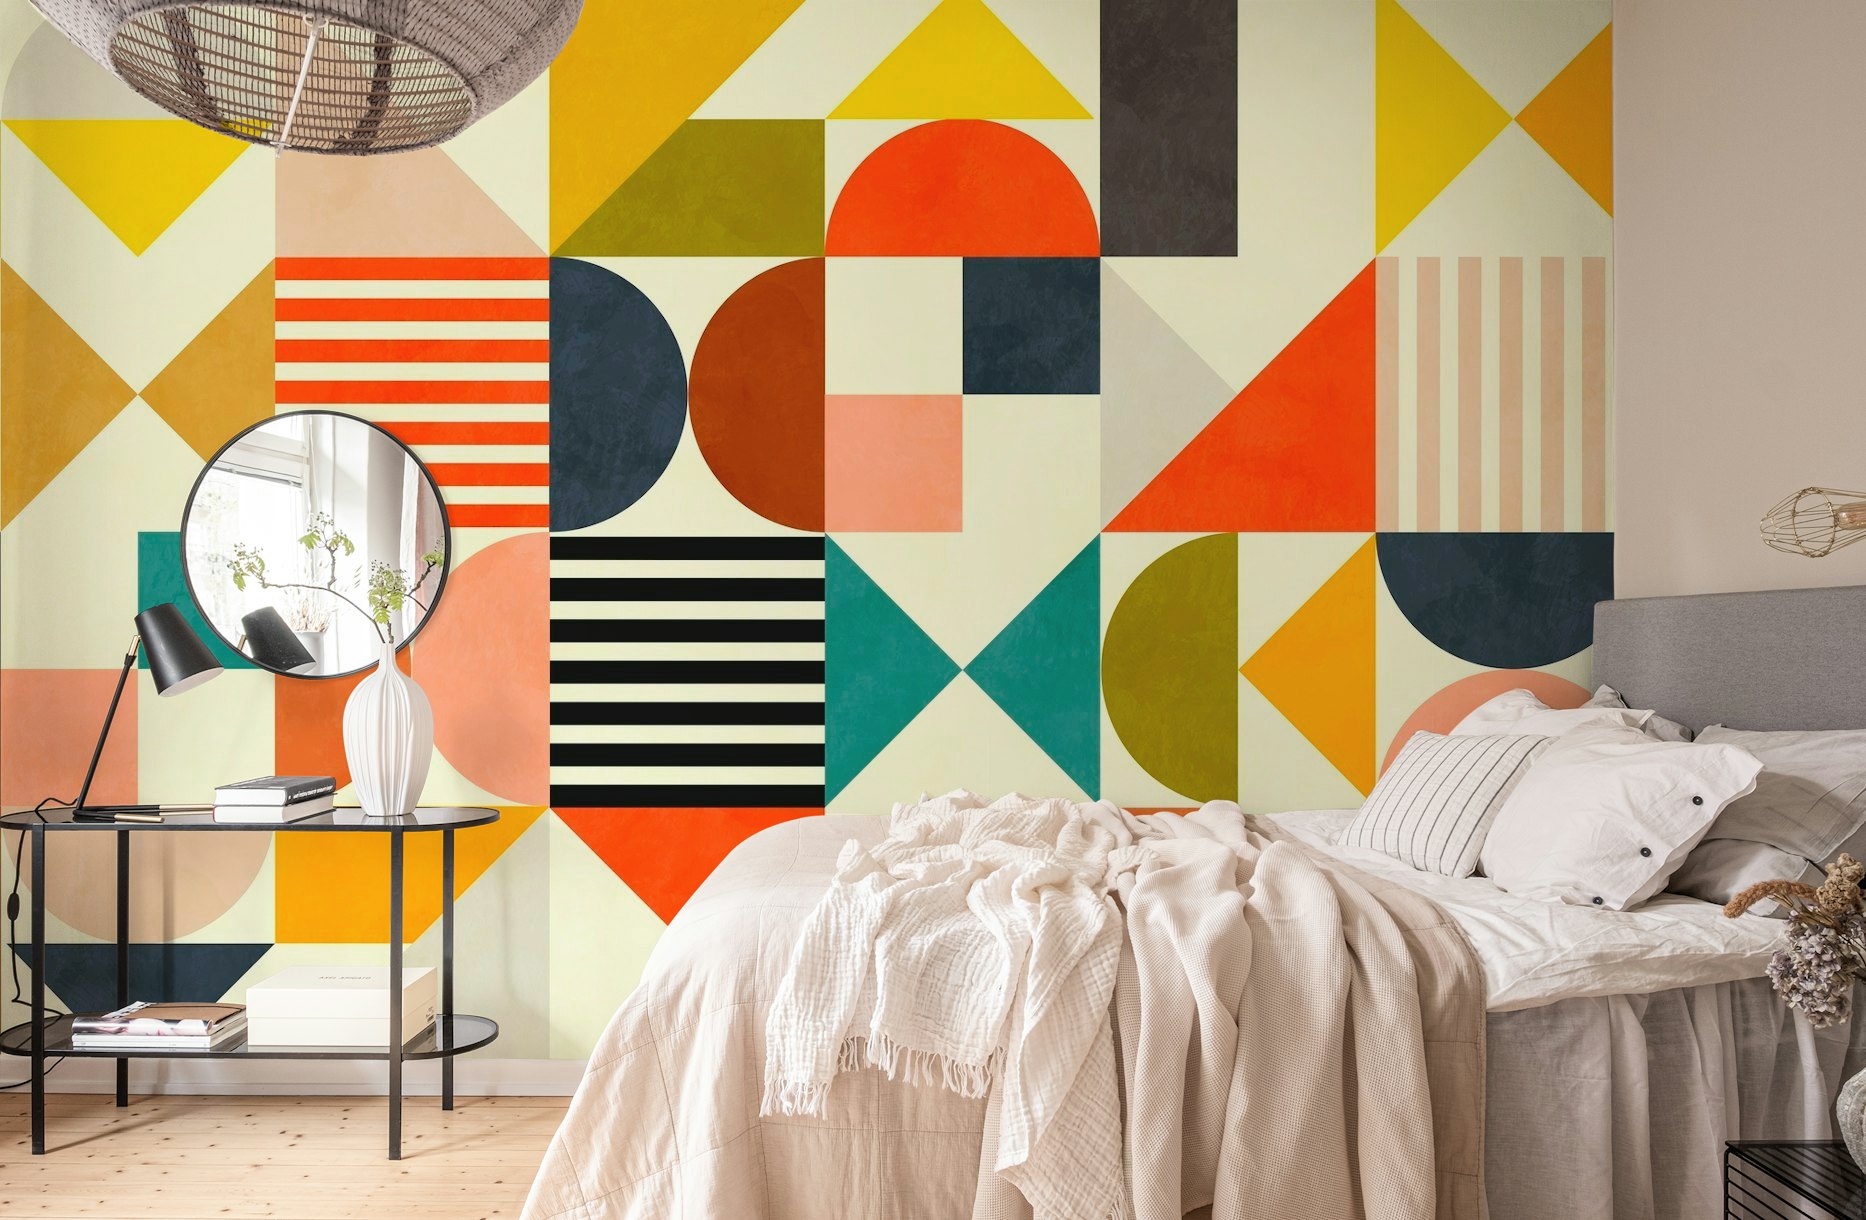 Colorful and vibrant Bauhaus geometric wallpaper design